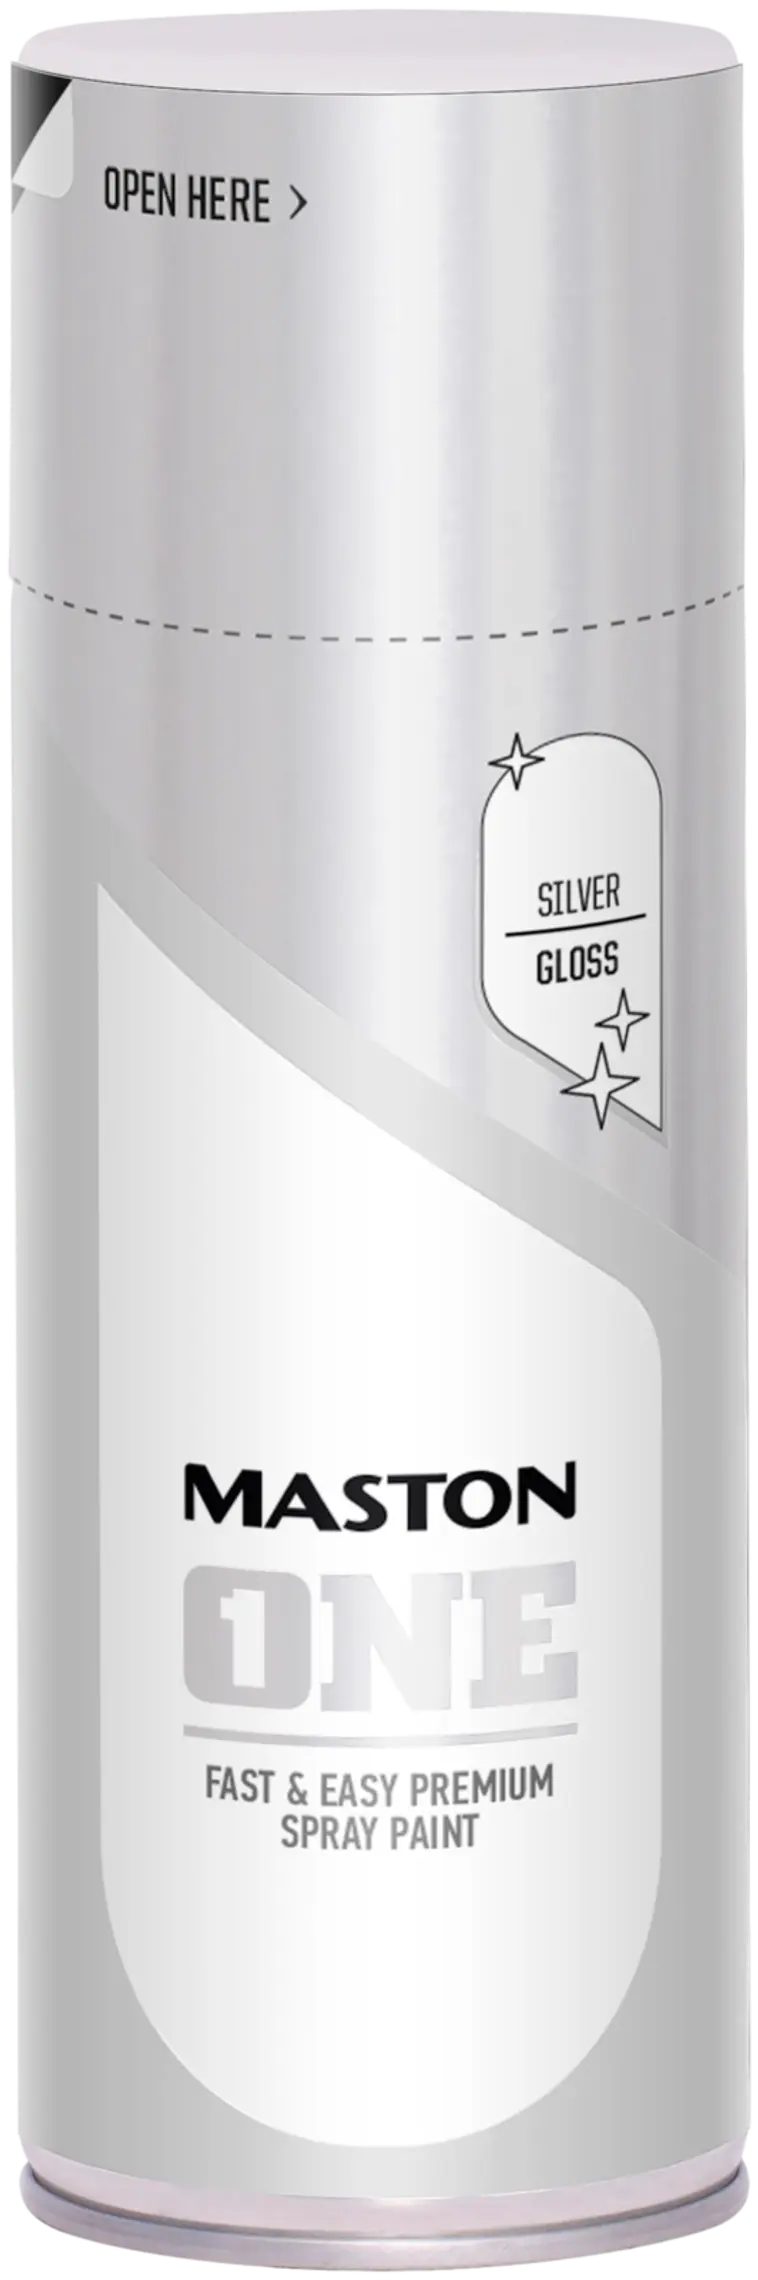 Maston One spraymaali 400ml hopea